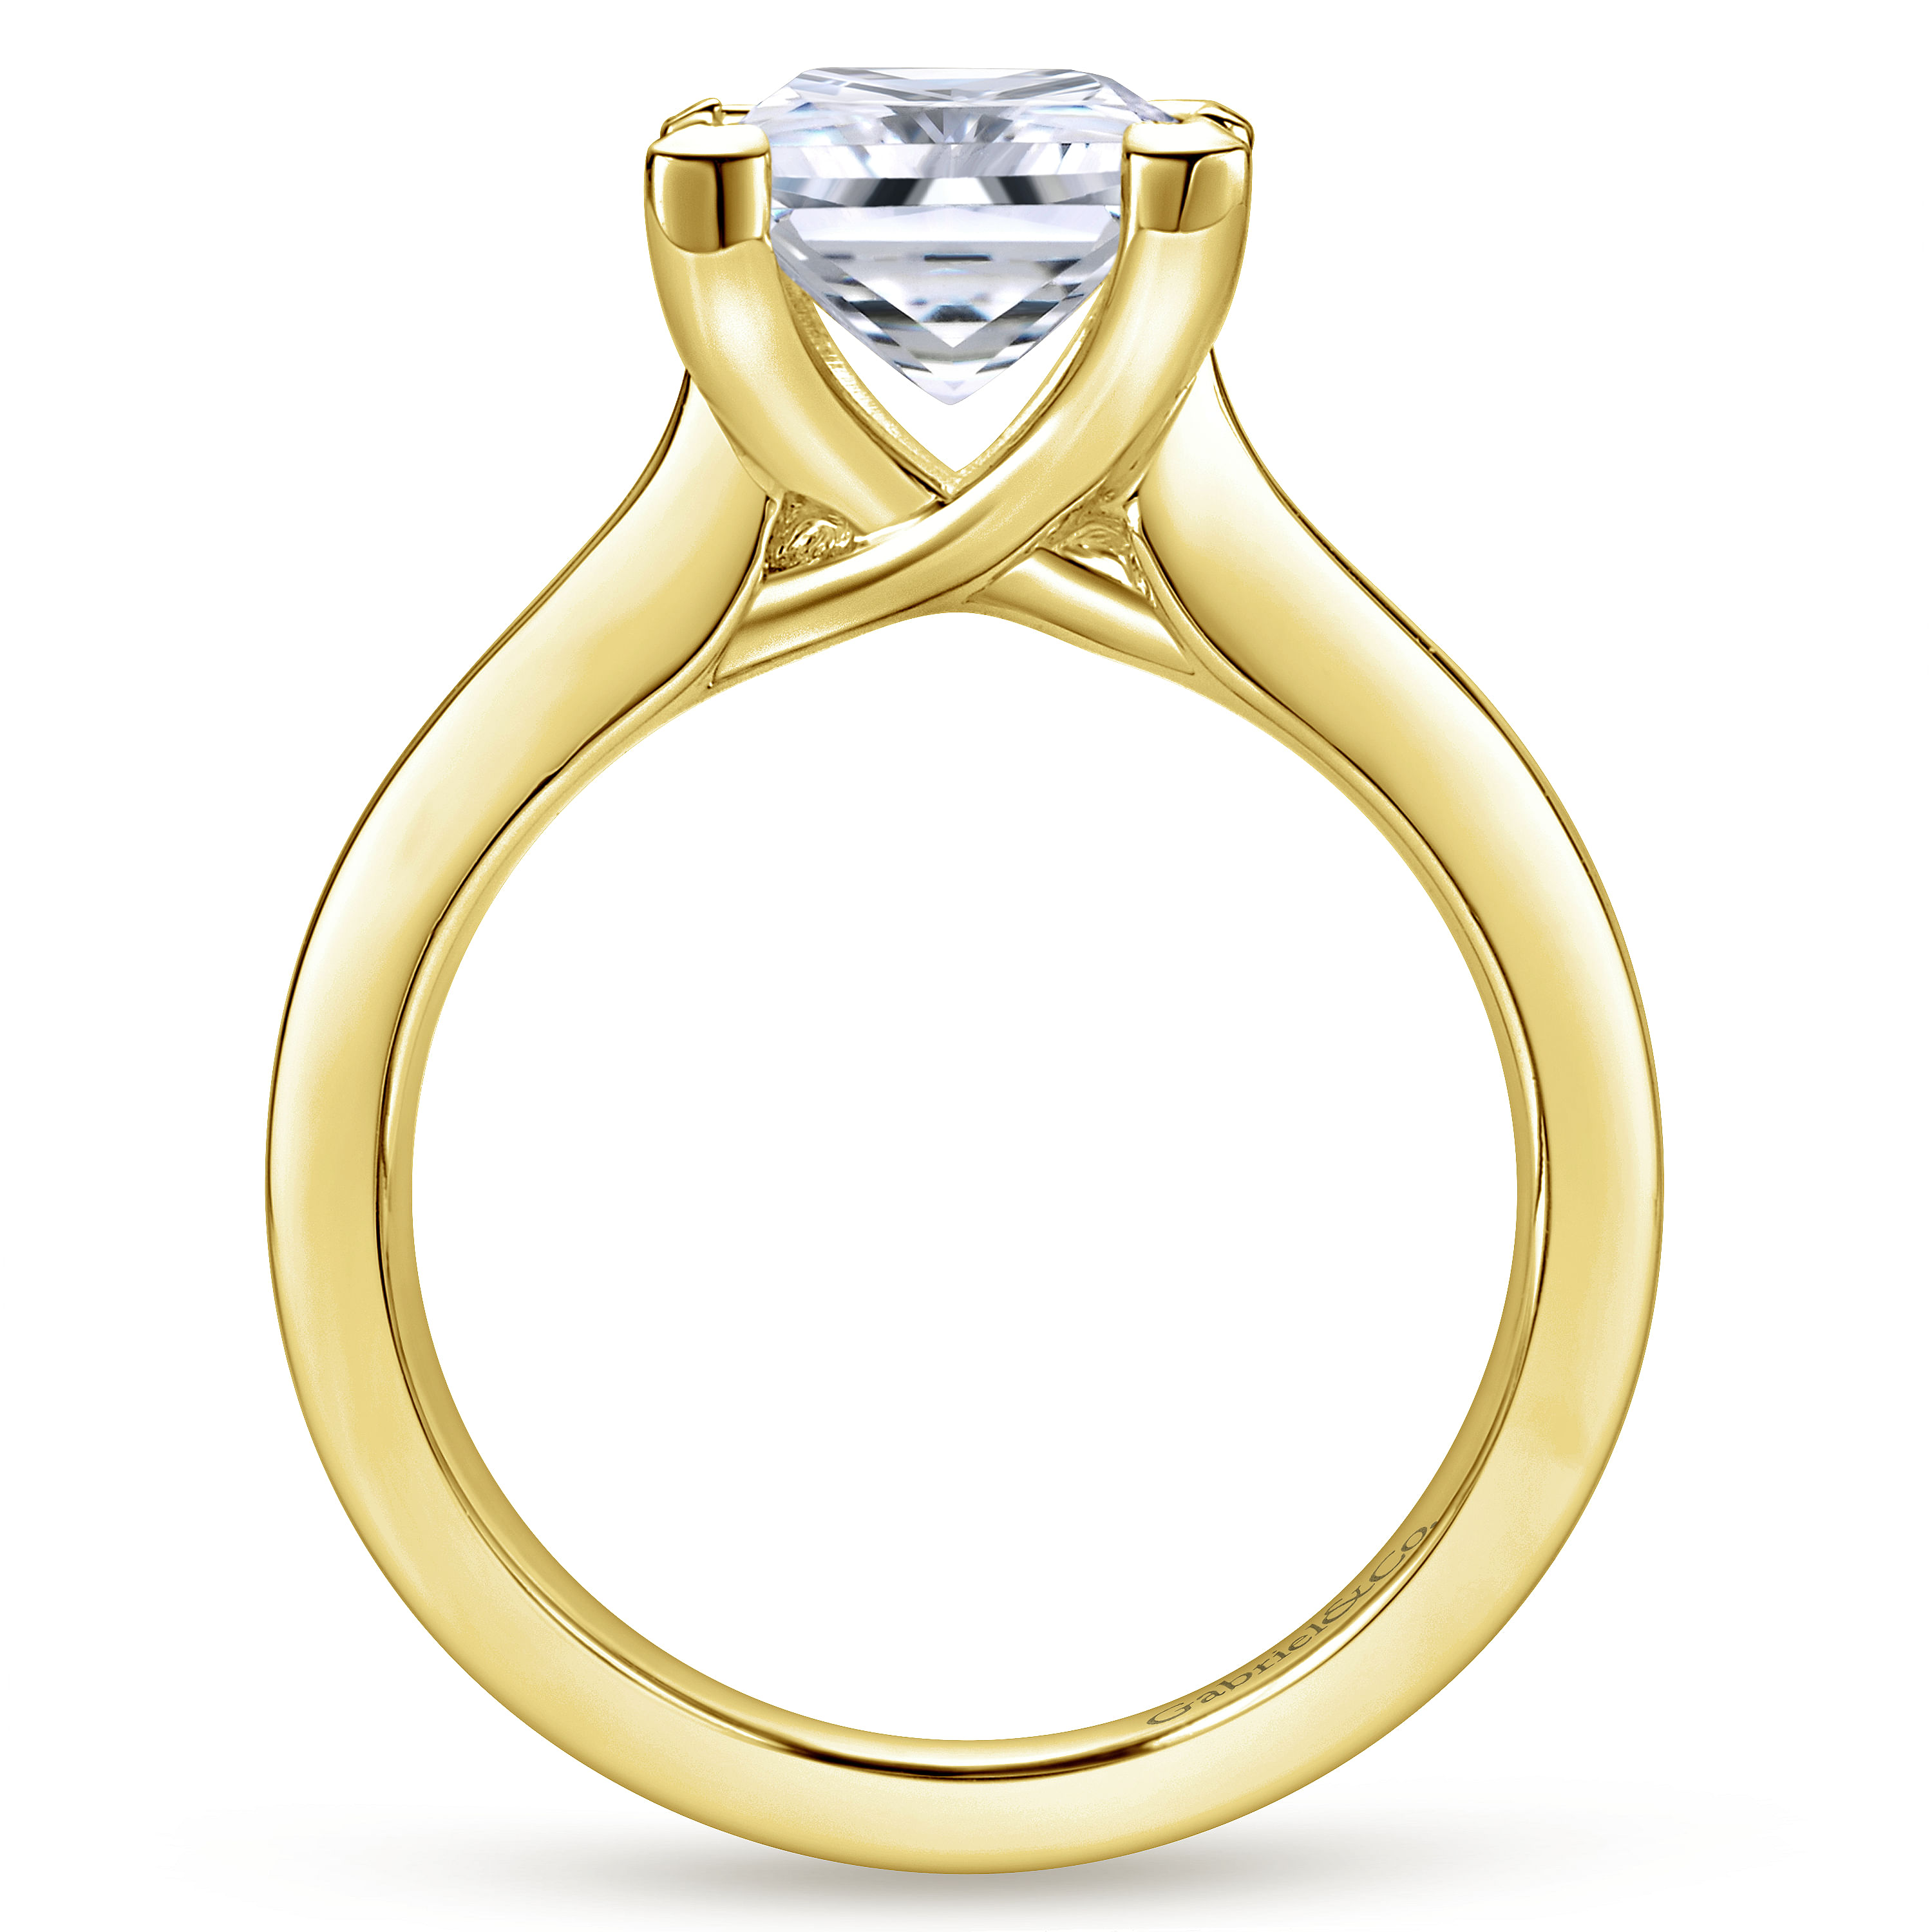 14K Yellow Gold Princess Cut Diamond Engagement Ring